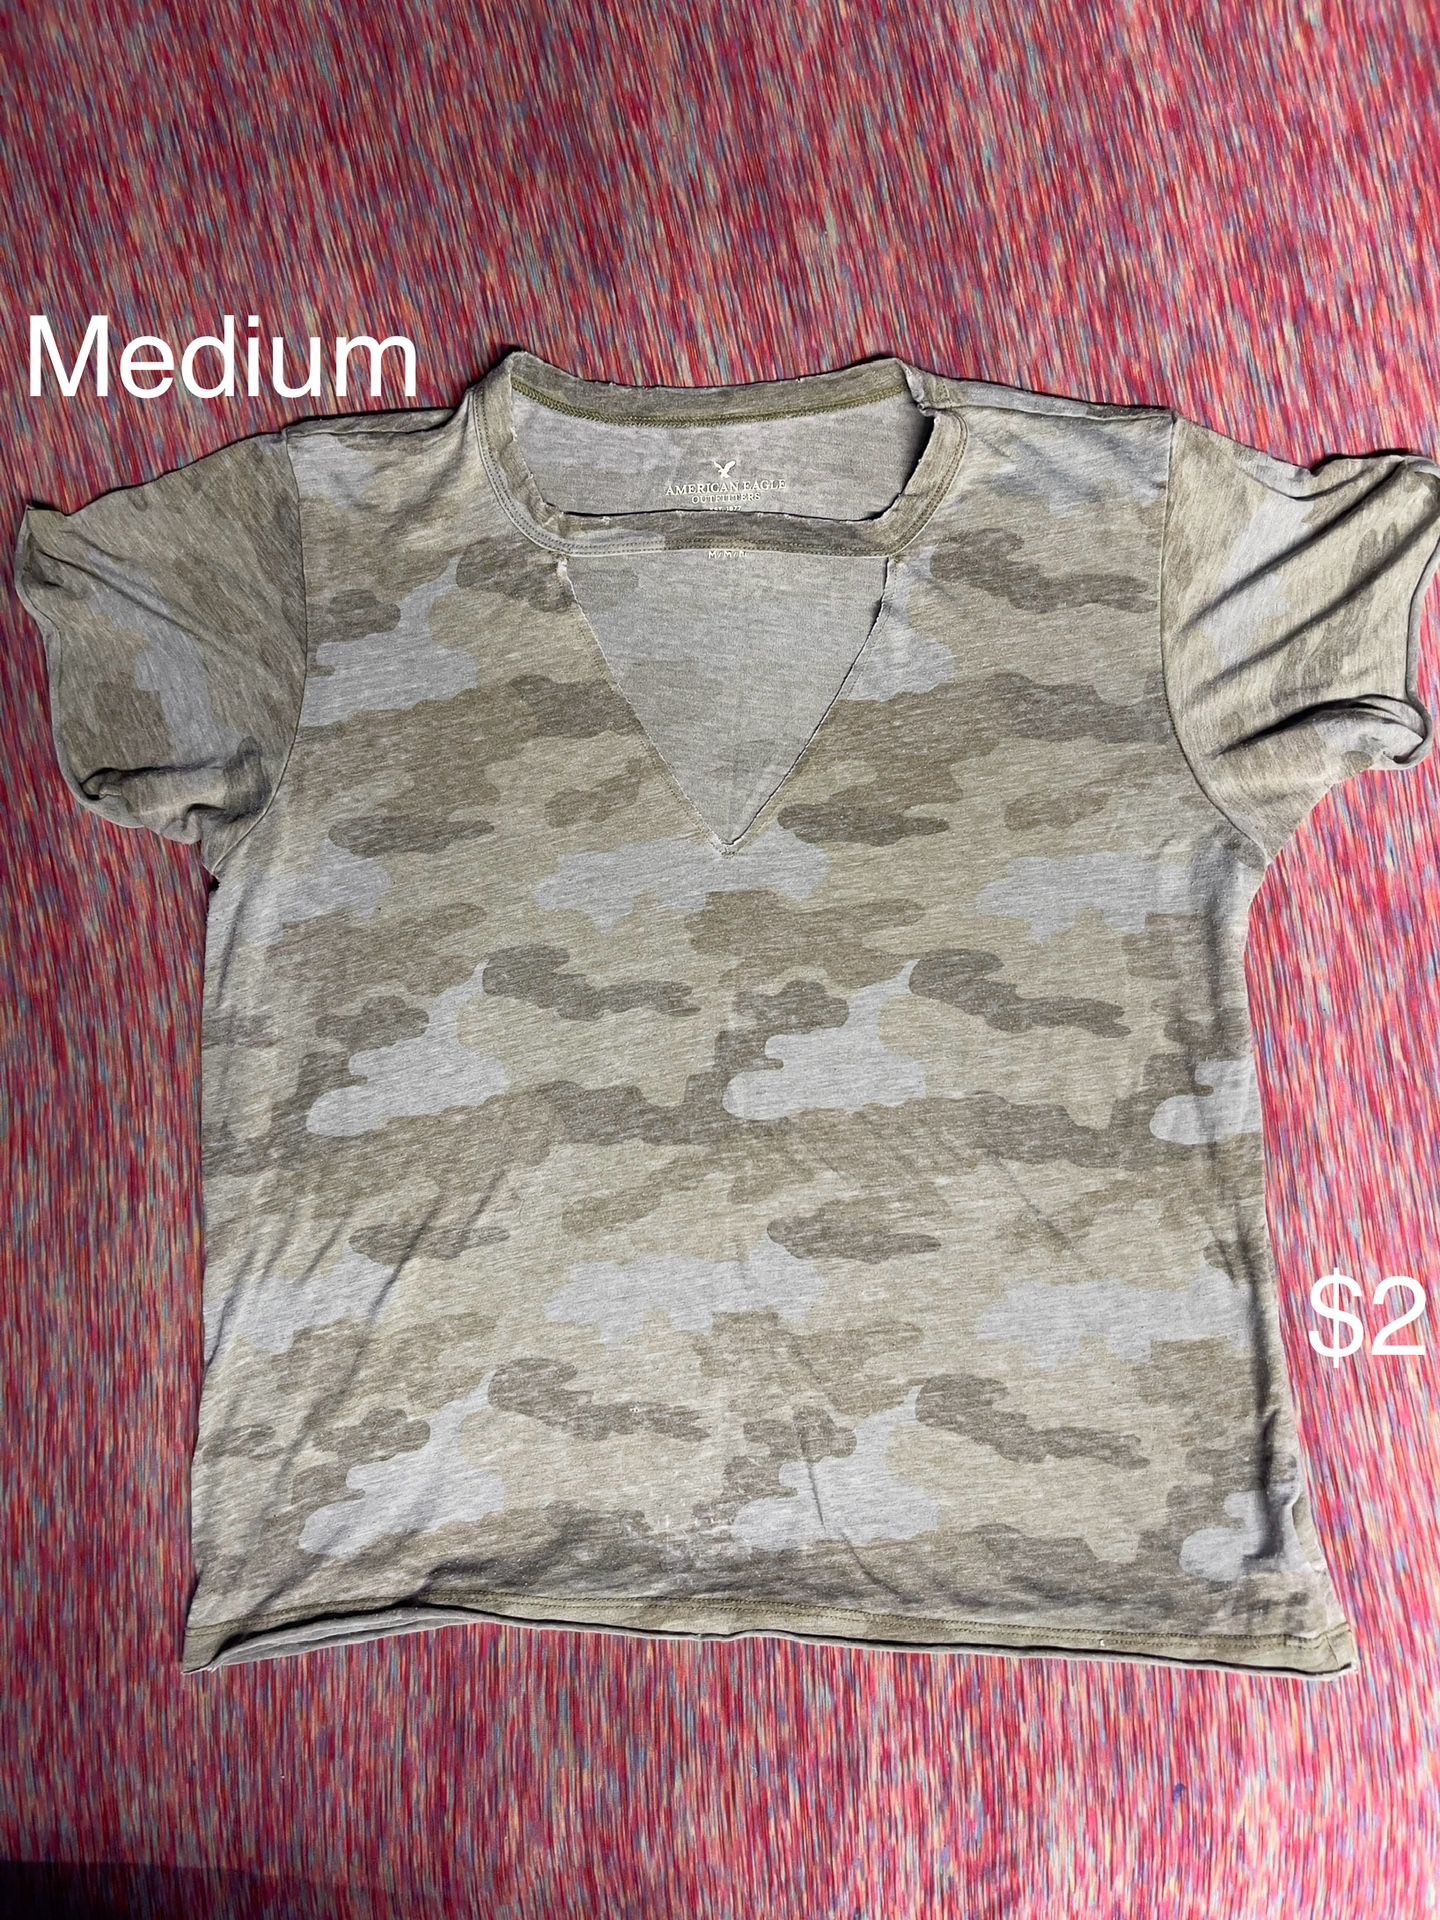 Medium camo shirt